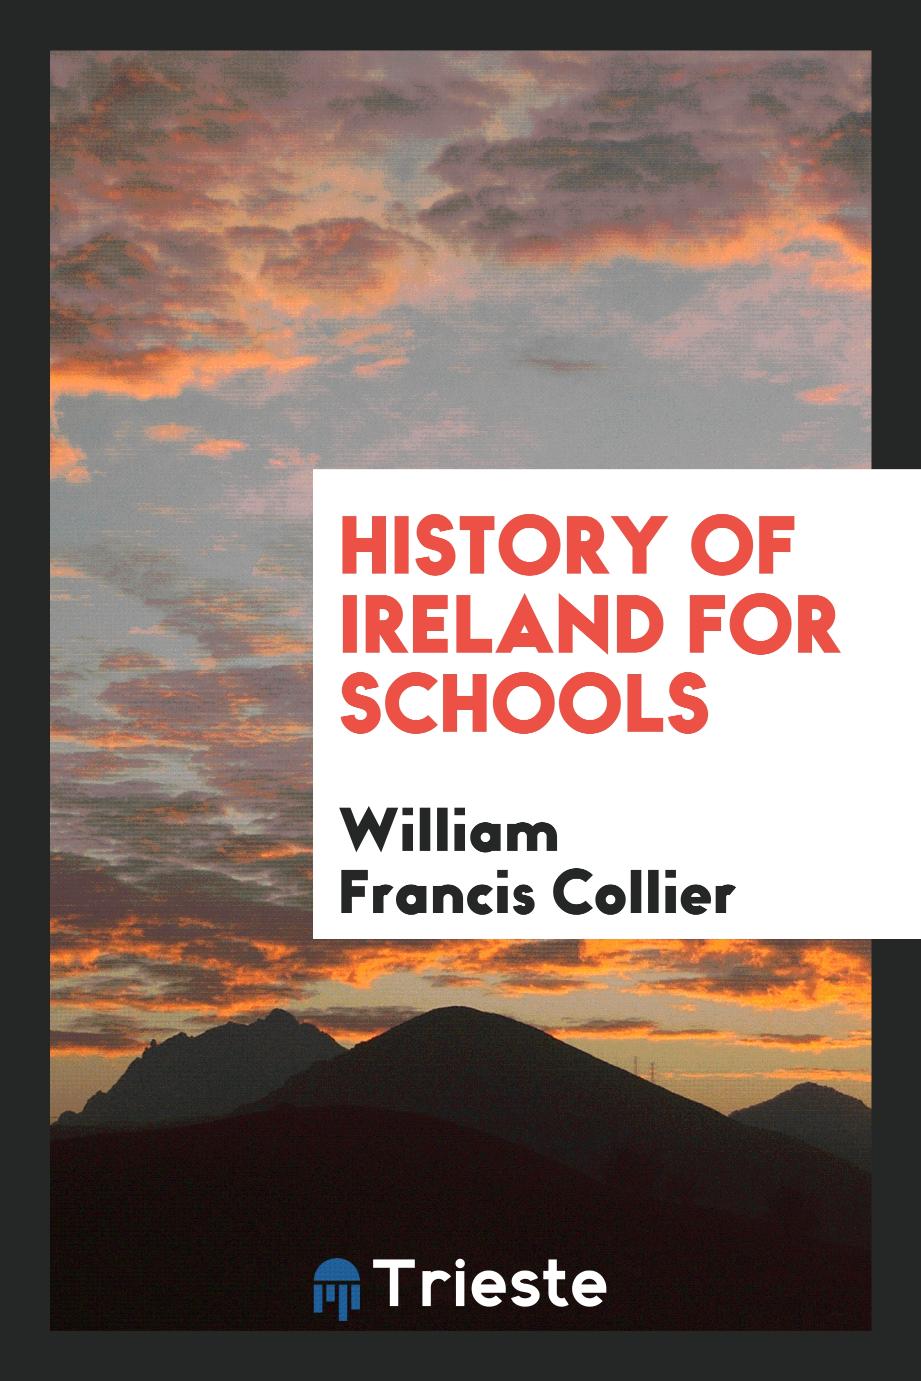 History of Ireland for schools